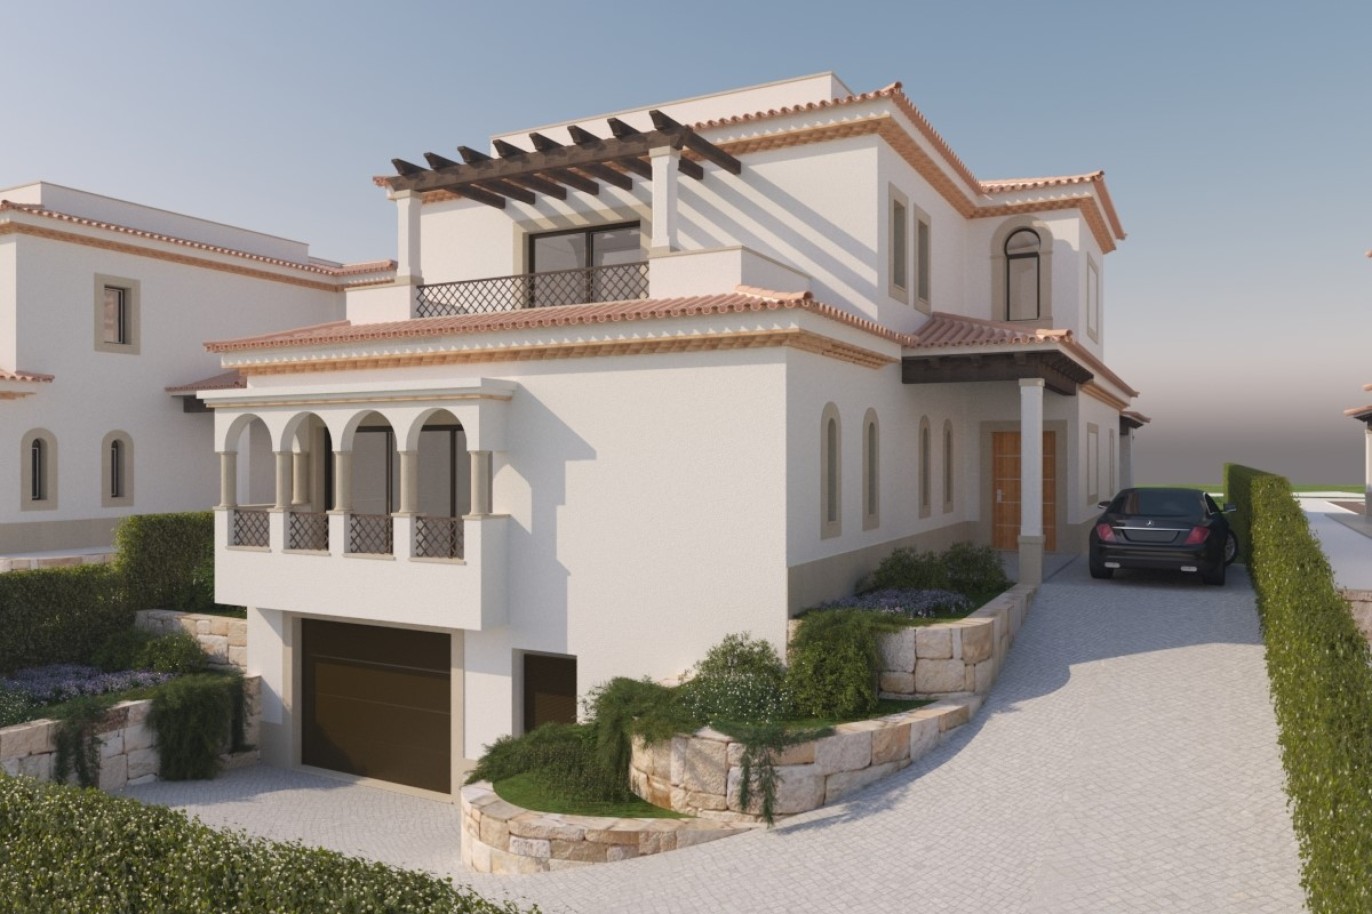 4 Bedroom Luxury Villa with pool for sale in Albufeira, Algarve_227984